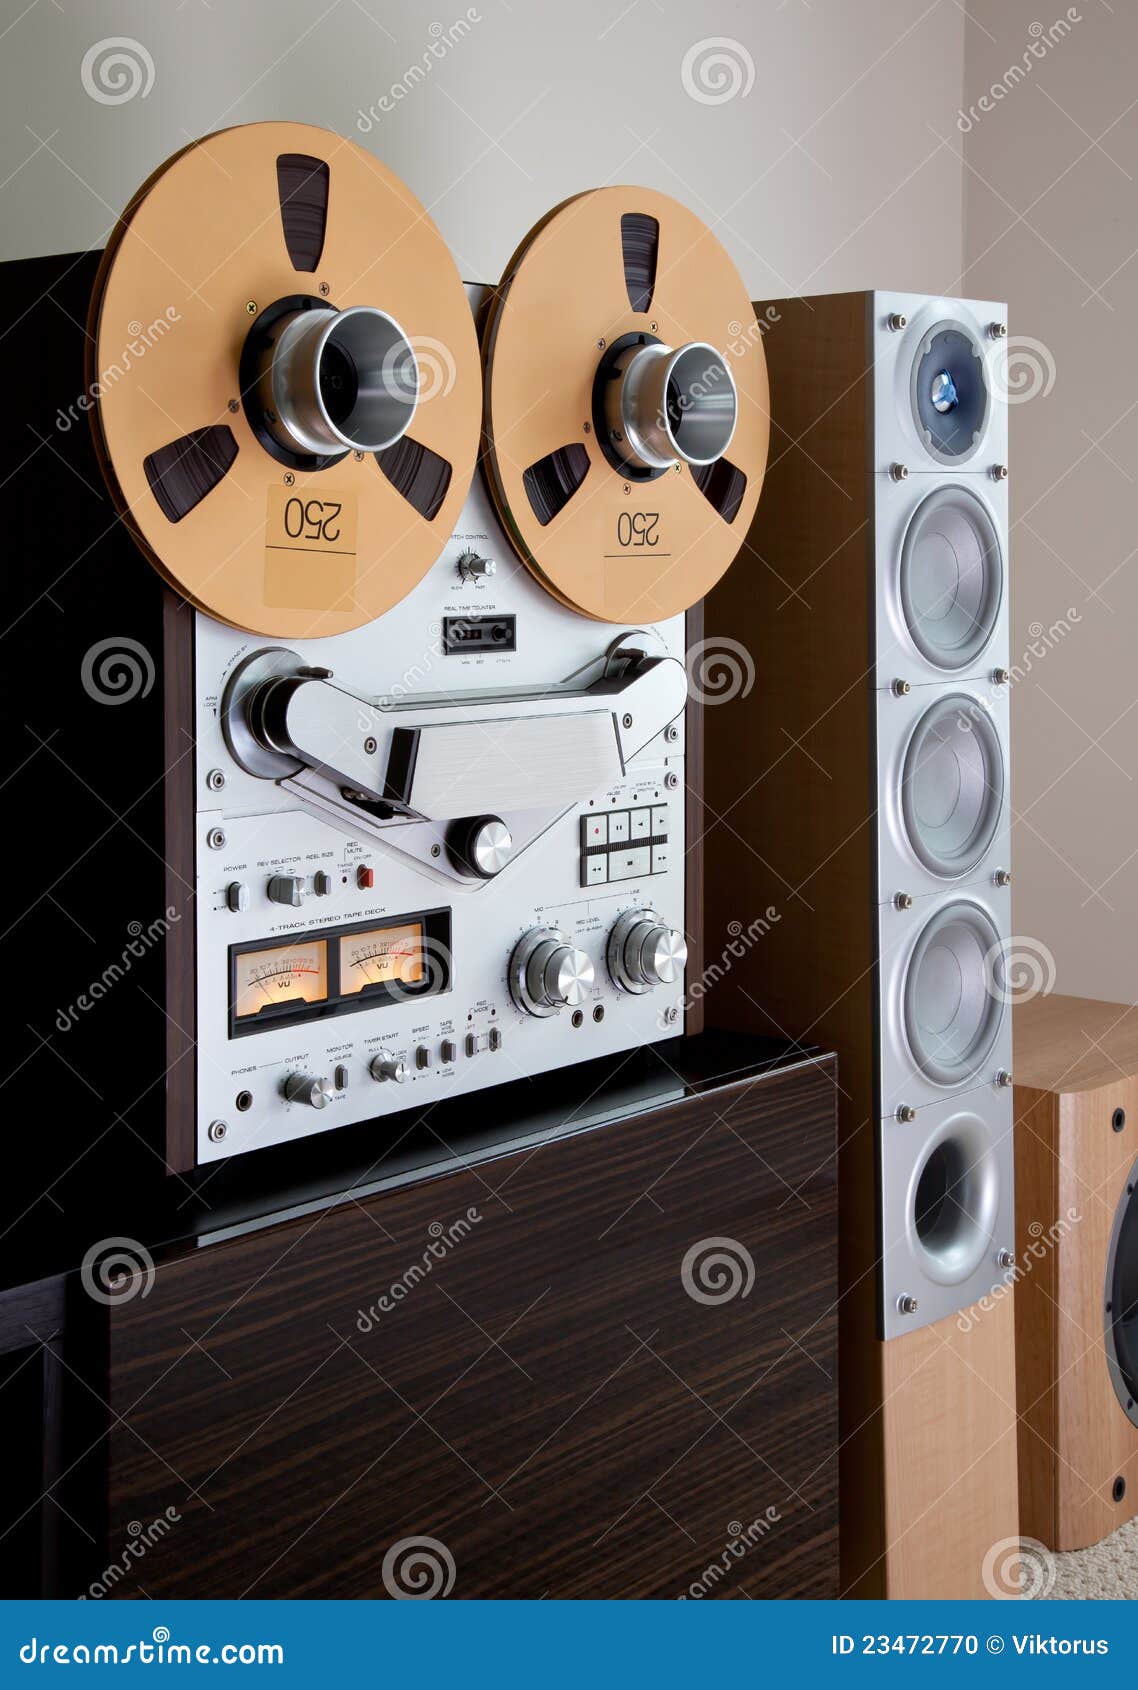 https://thumbs.dreamstime.com/z/analog-stereo-open-reel-tape-deck-recorder-23472770.jpg